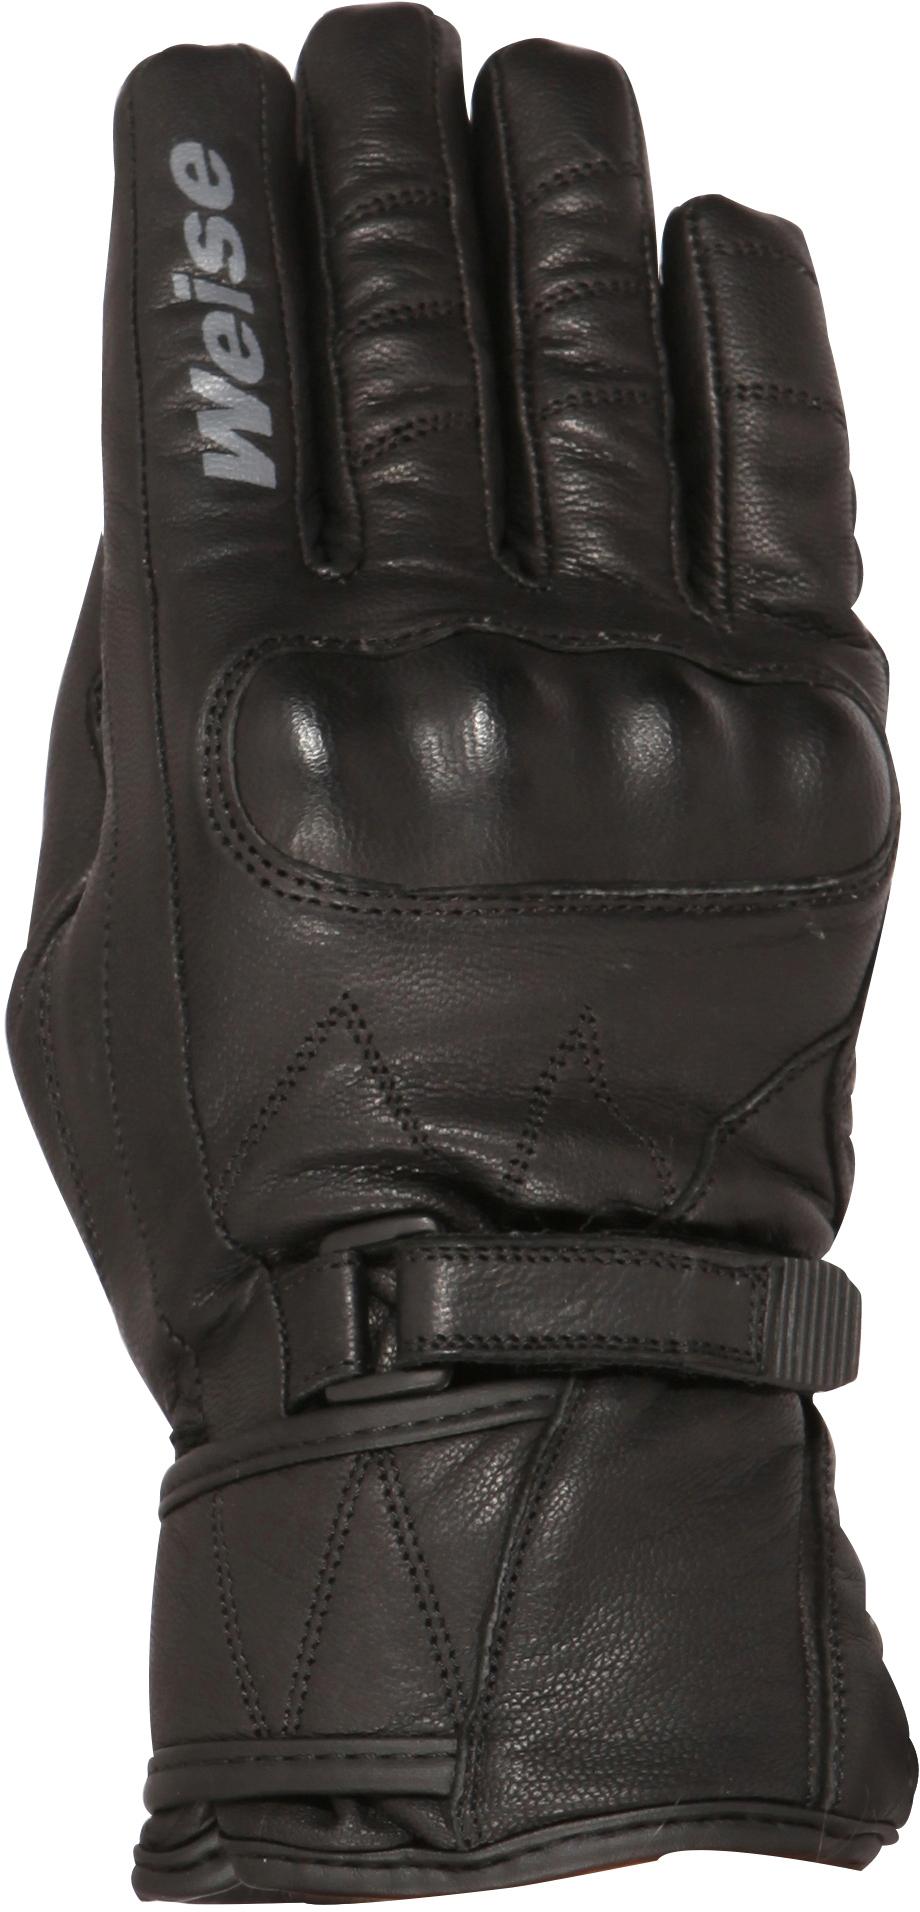 Weise Ripley Ladies Gloves Black Xs